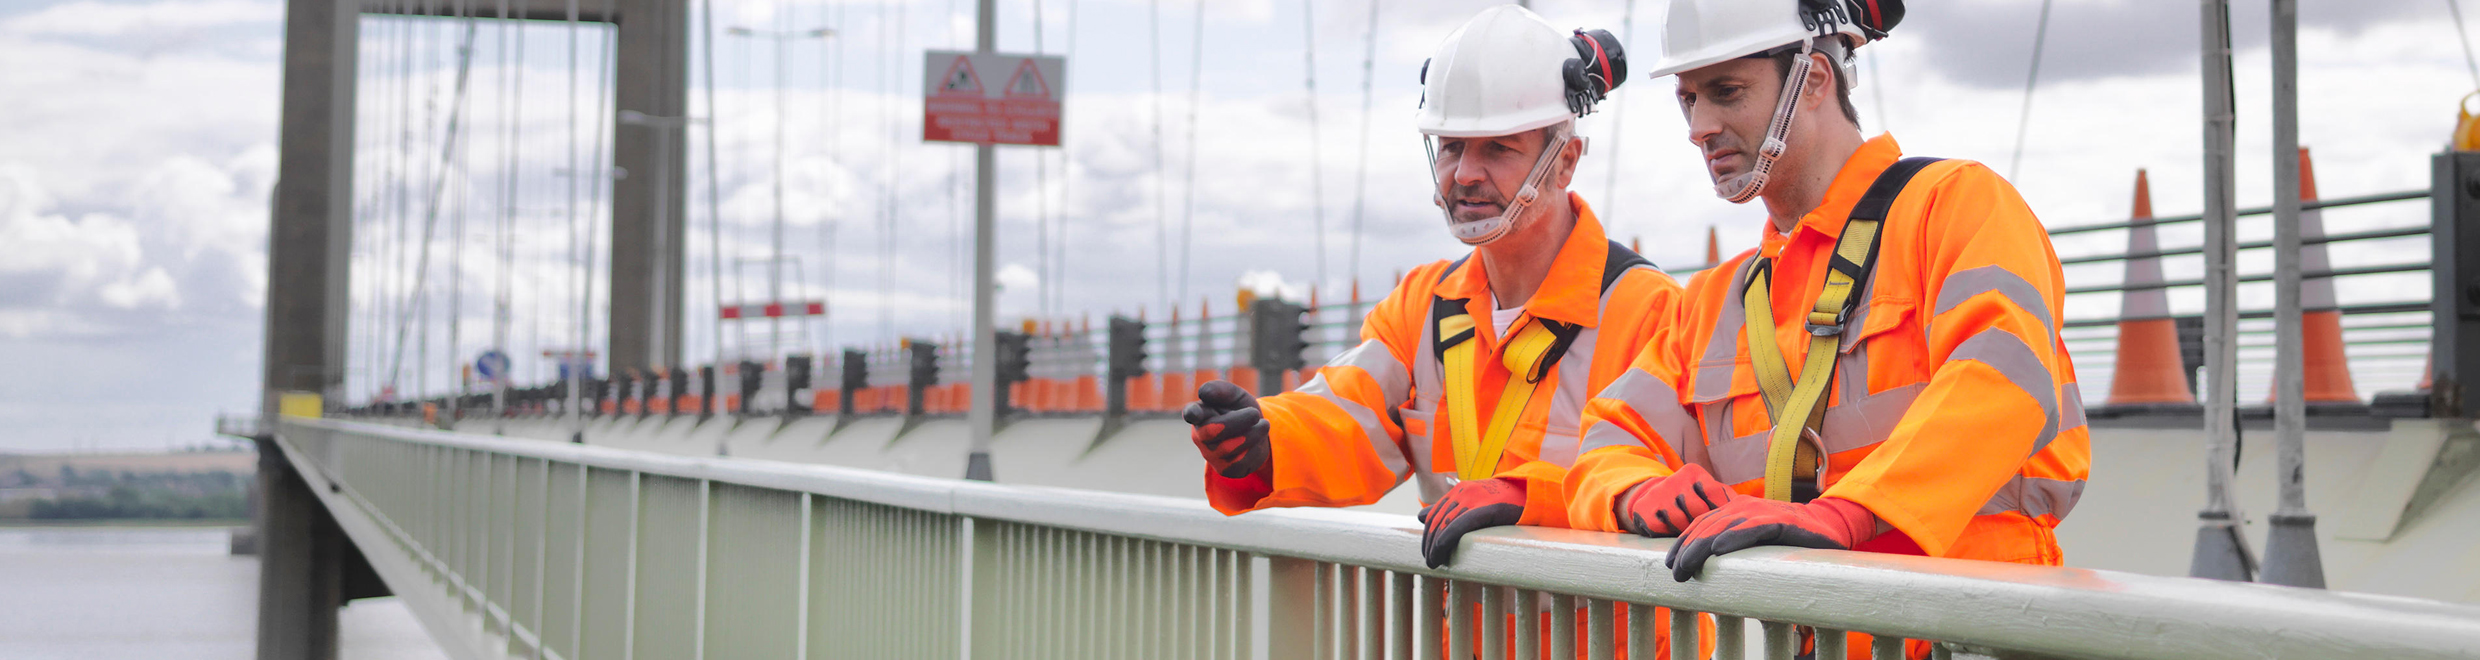 Bridge Workers in orange PPE